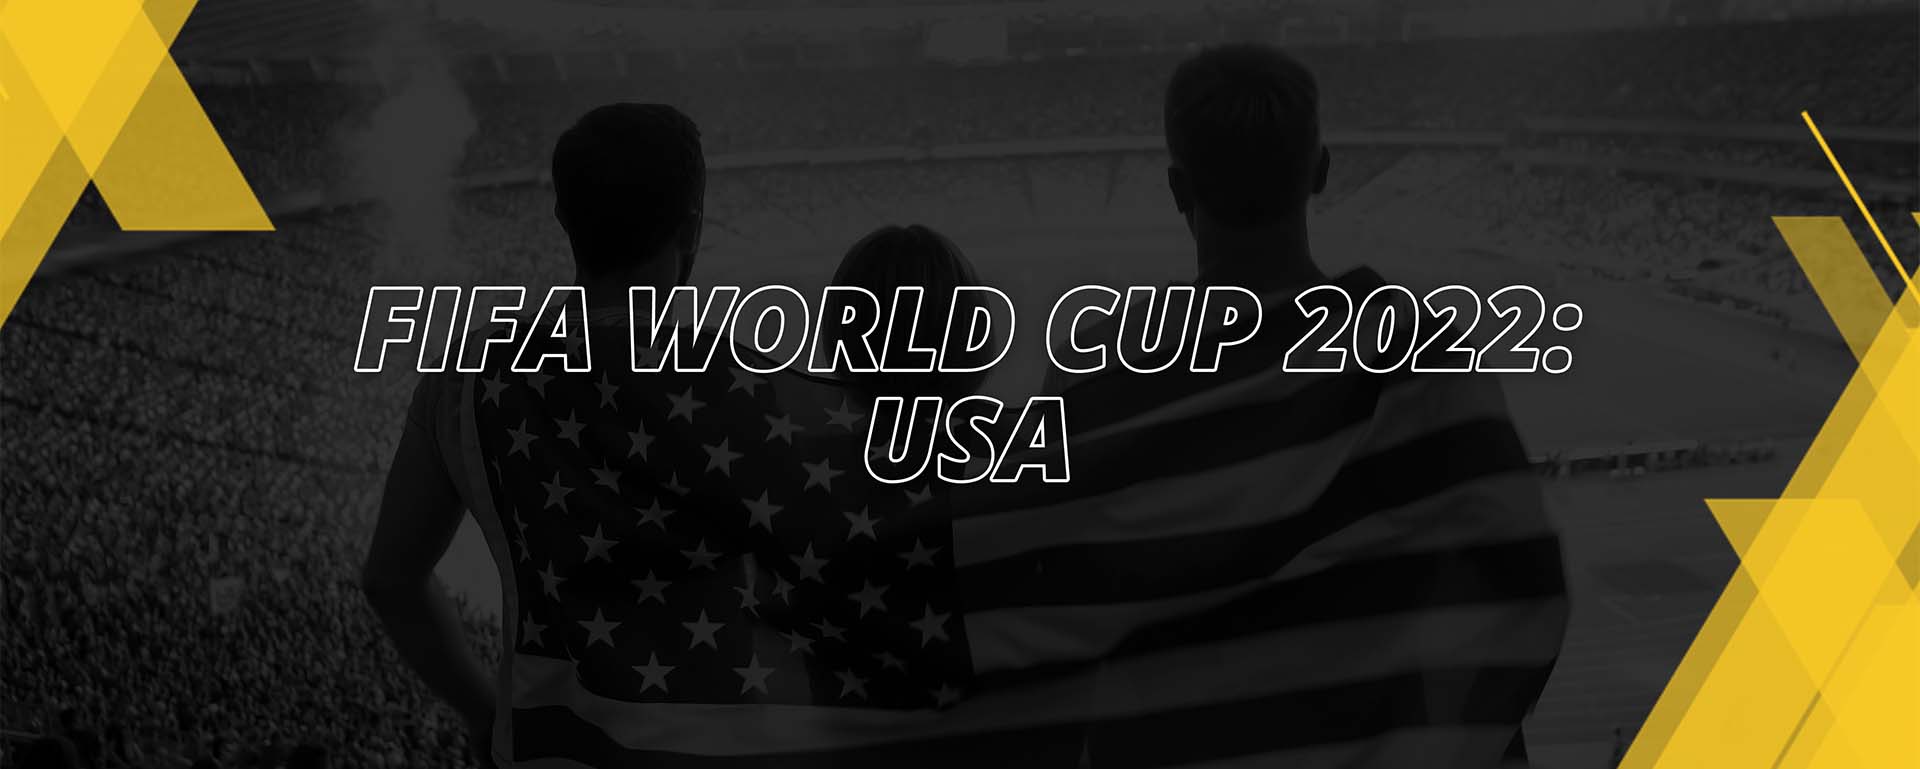 USA – FIFA WORLD CUP QATAR 2022 – FAN’S COMPENDIUM